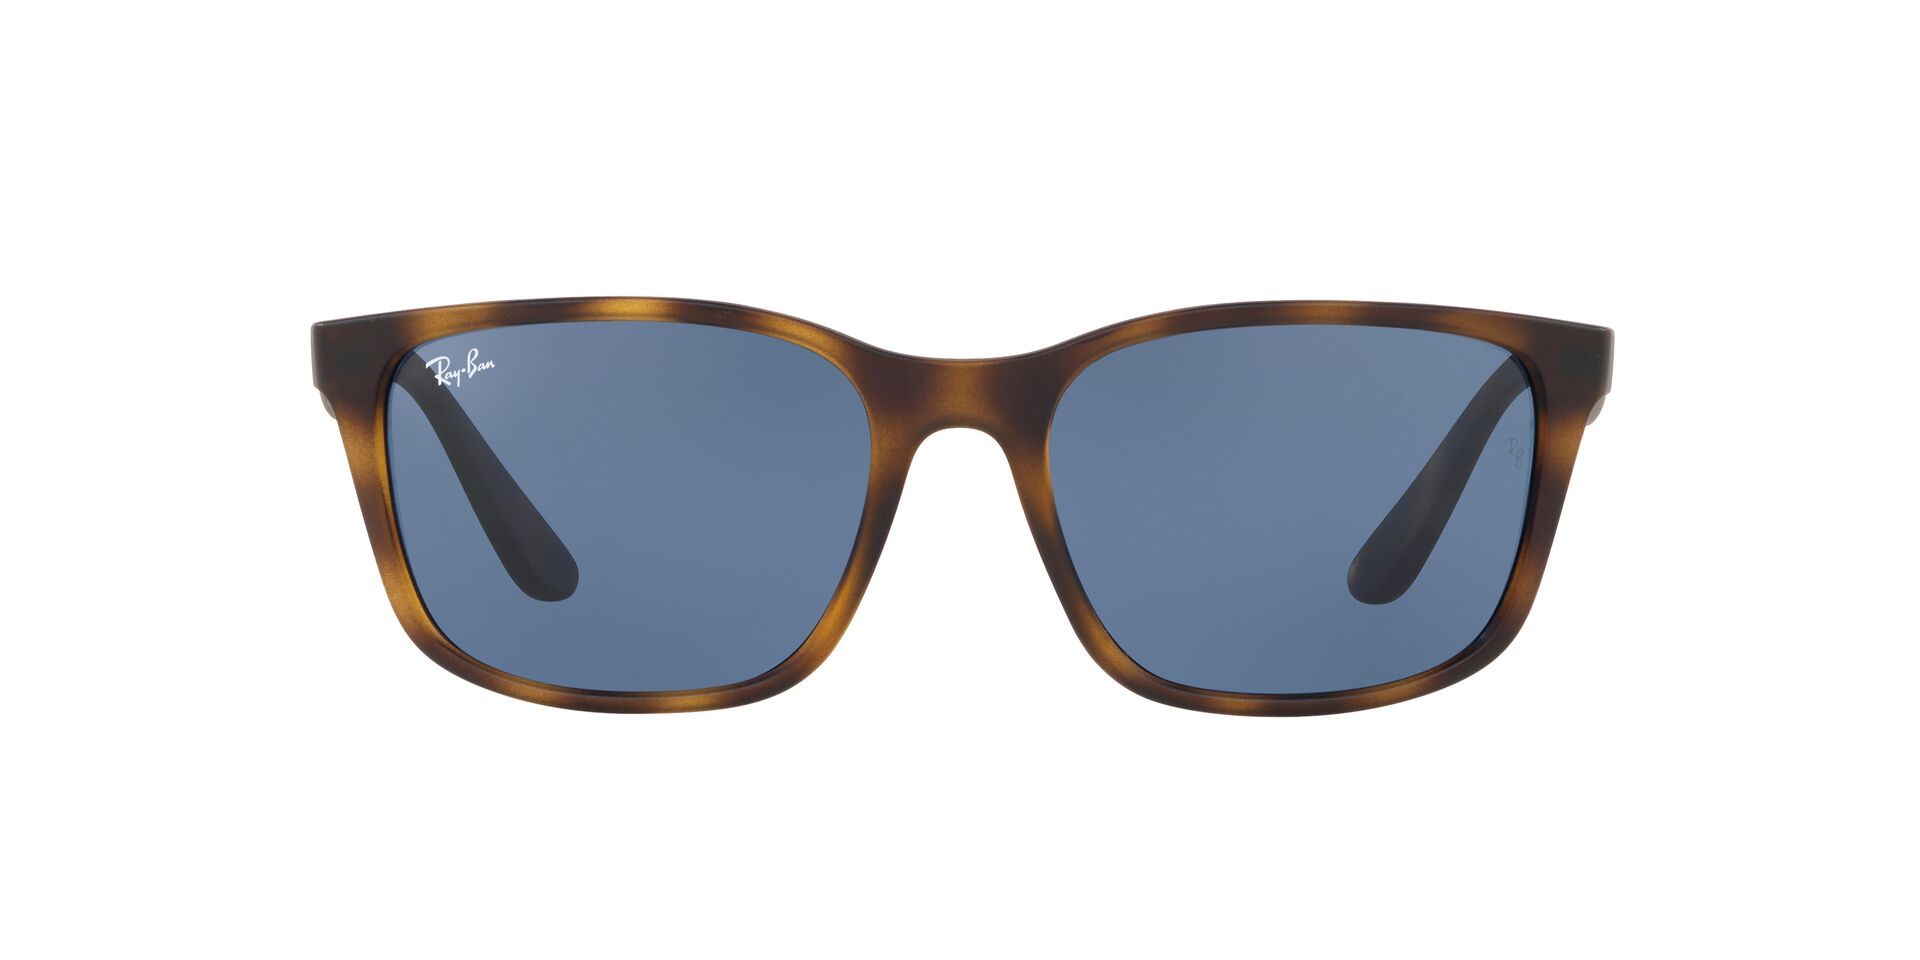 Ray-Ban Men Polarized Grey Lens Pilot Sunglasses - 0RB3025I001/5762 :  Amazon.in: Fashion